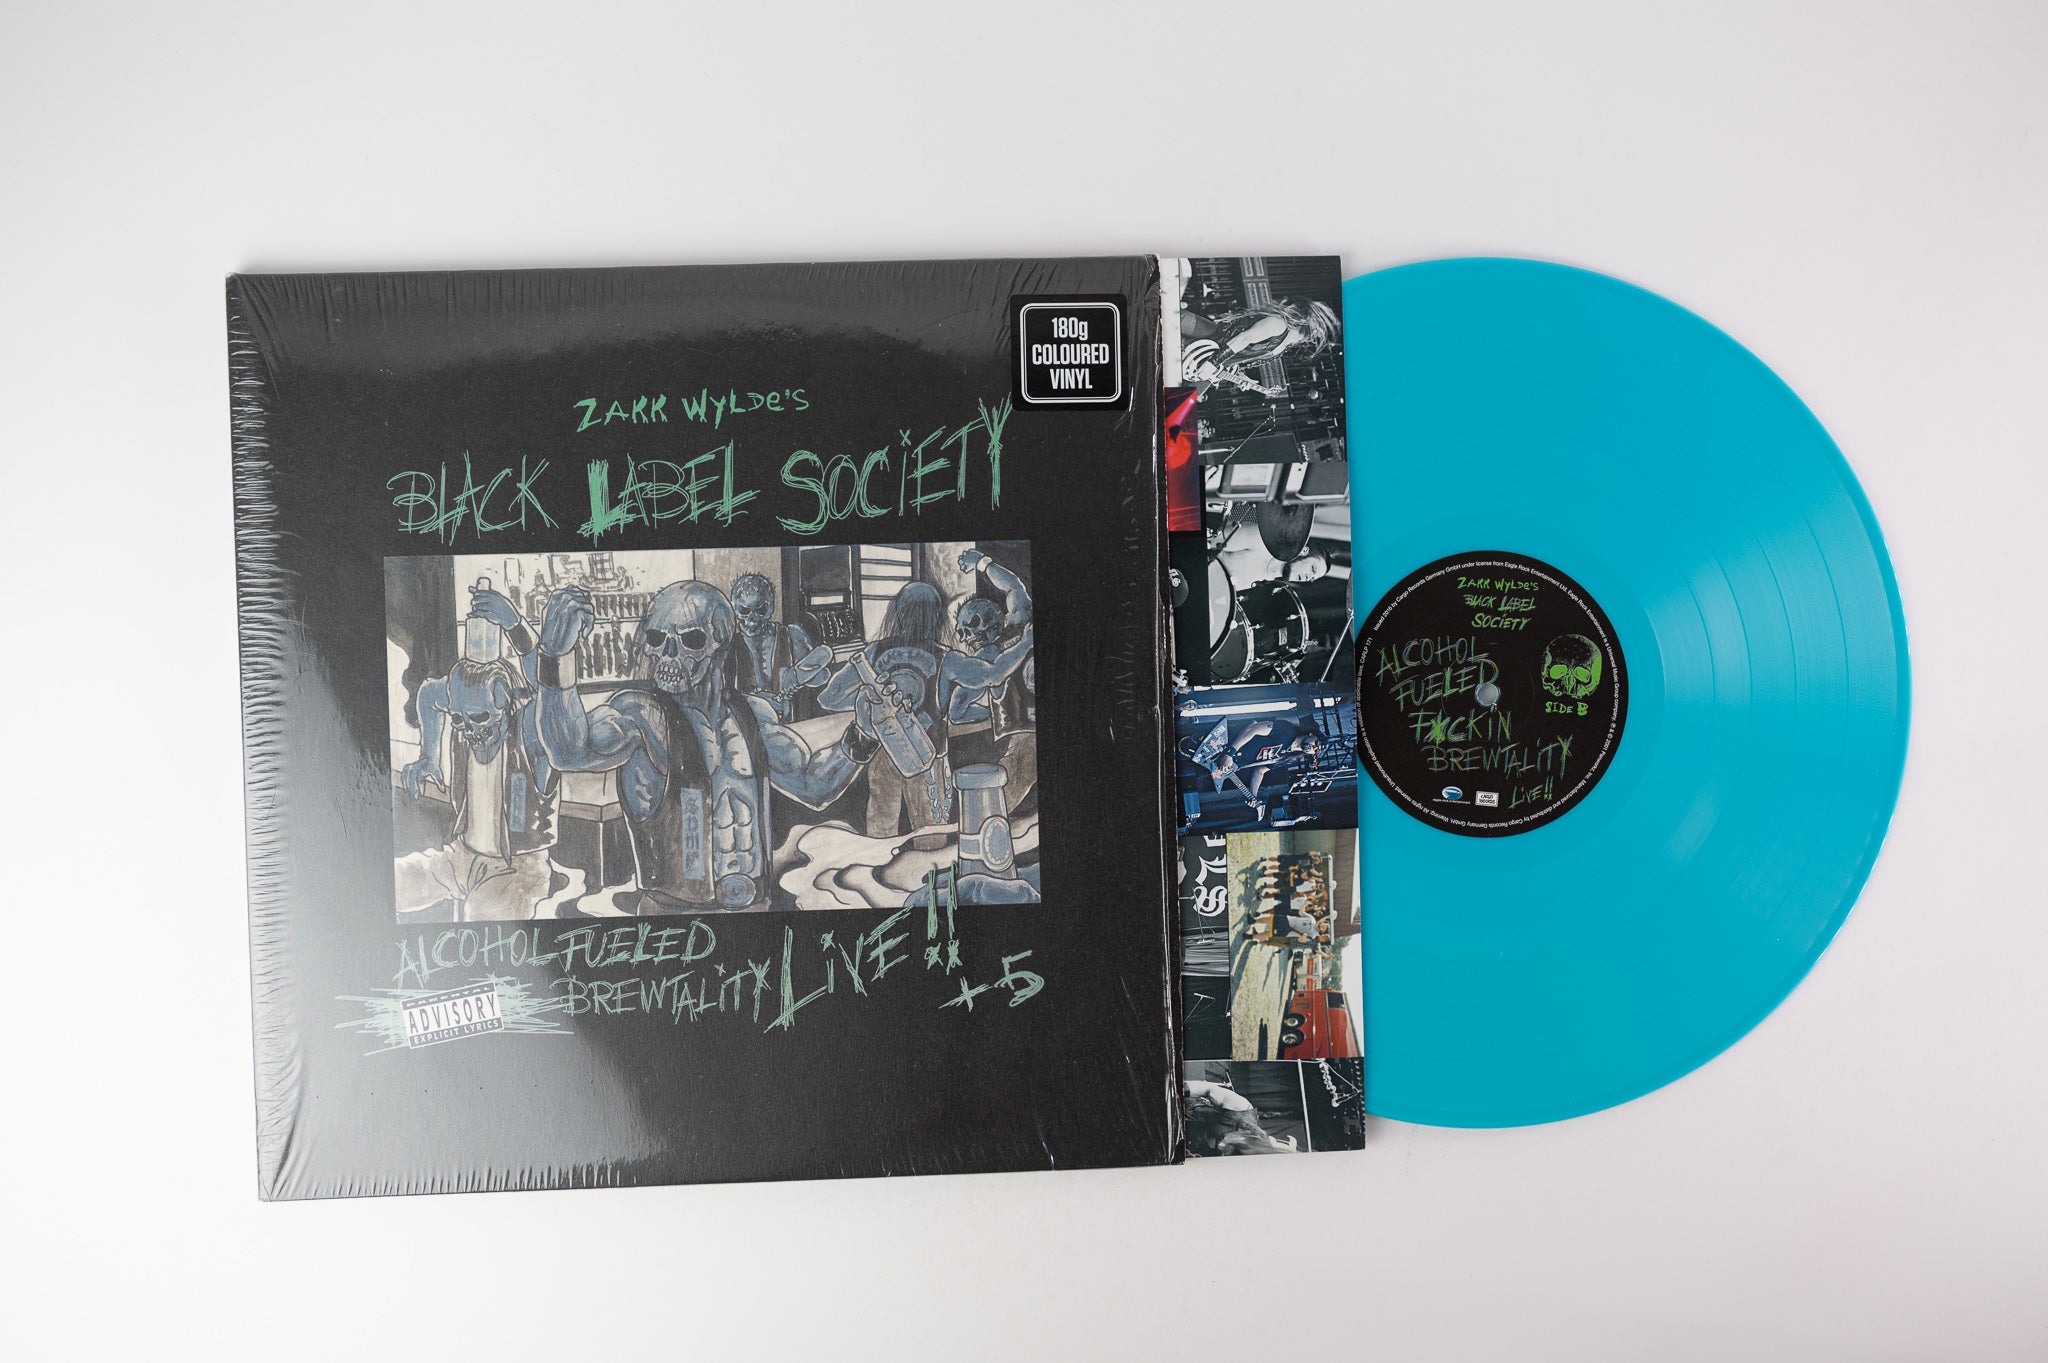 Black Label Society - Alcohol Fueled Brewtality Live!! + 5 on Cargo Blue Vinyl 180 Gram